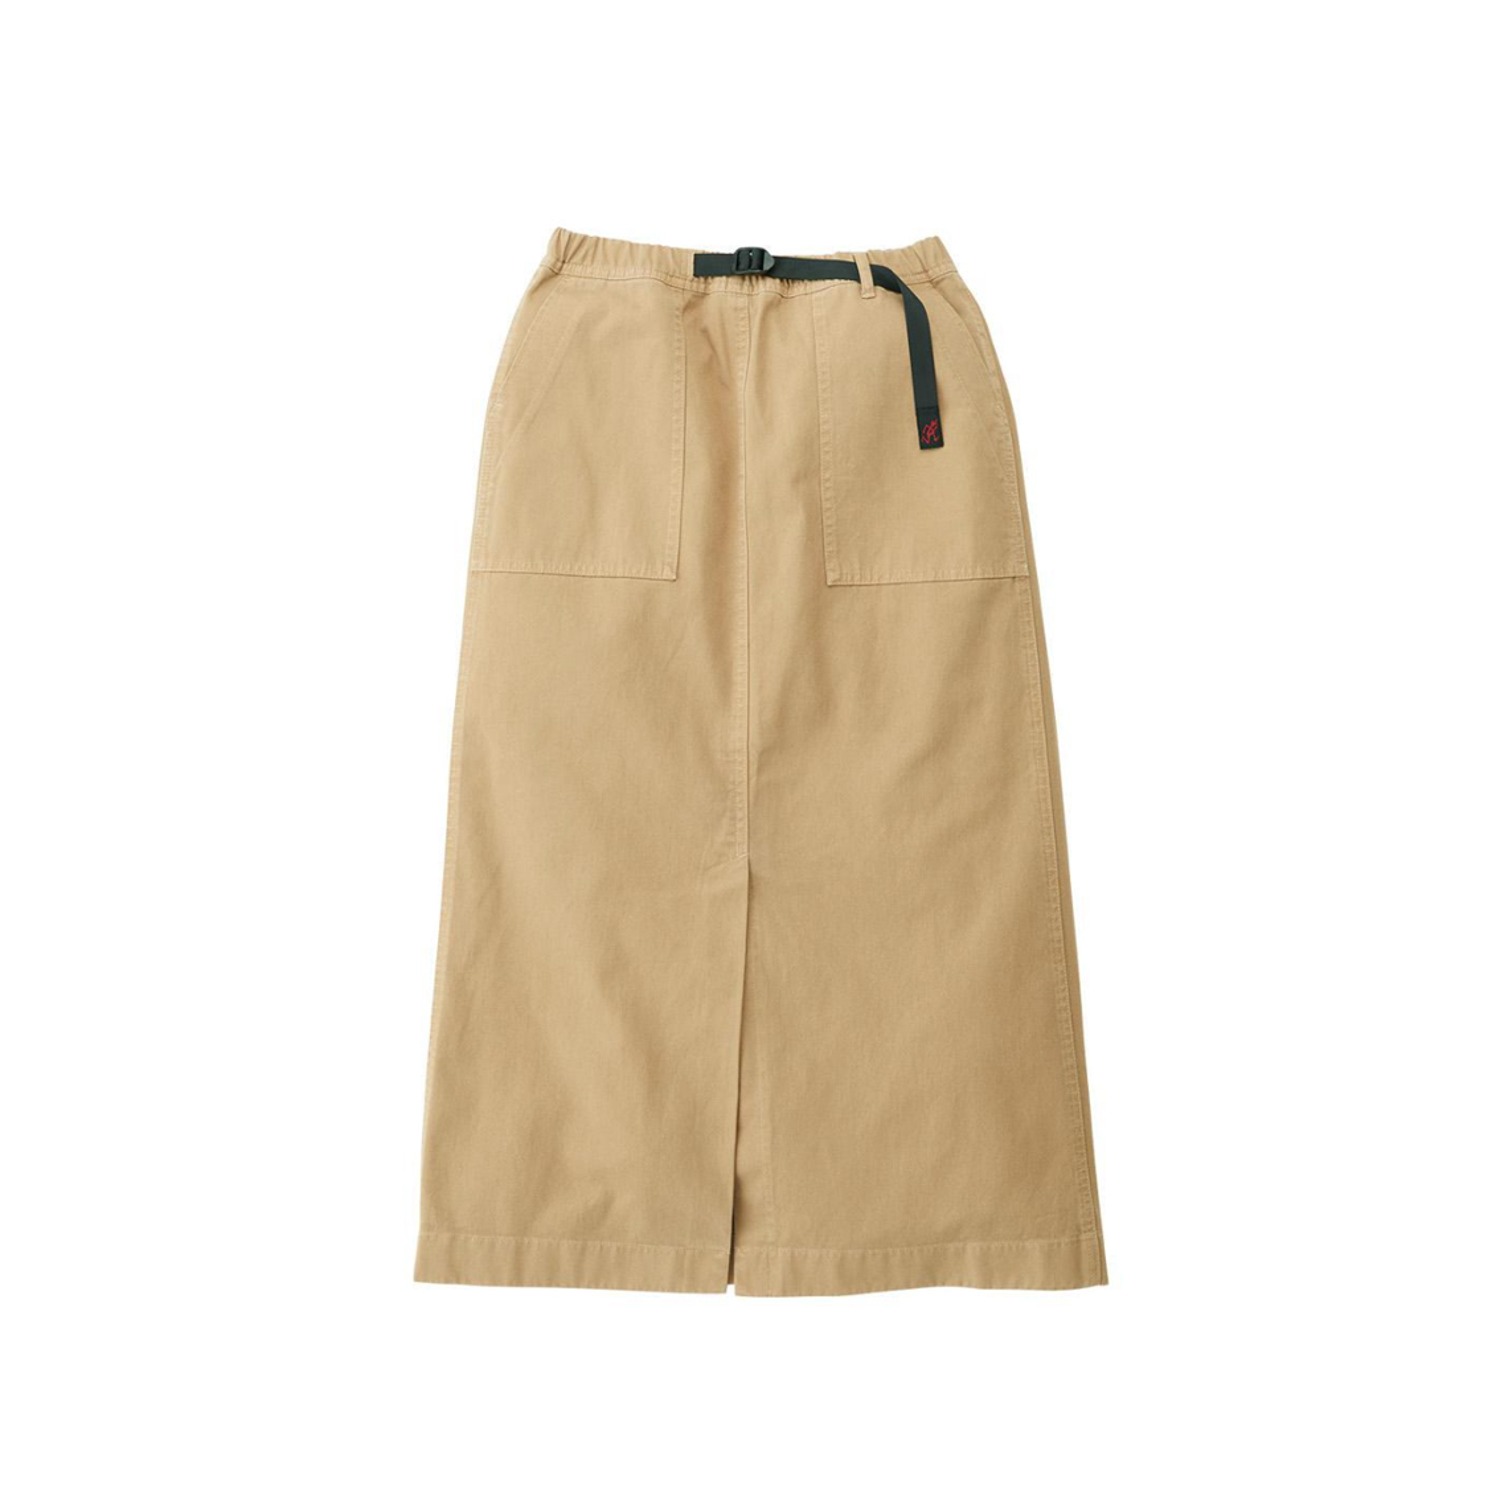 Long Baker Skirt Chino - 2size, 그라미치 베이커 스커트